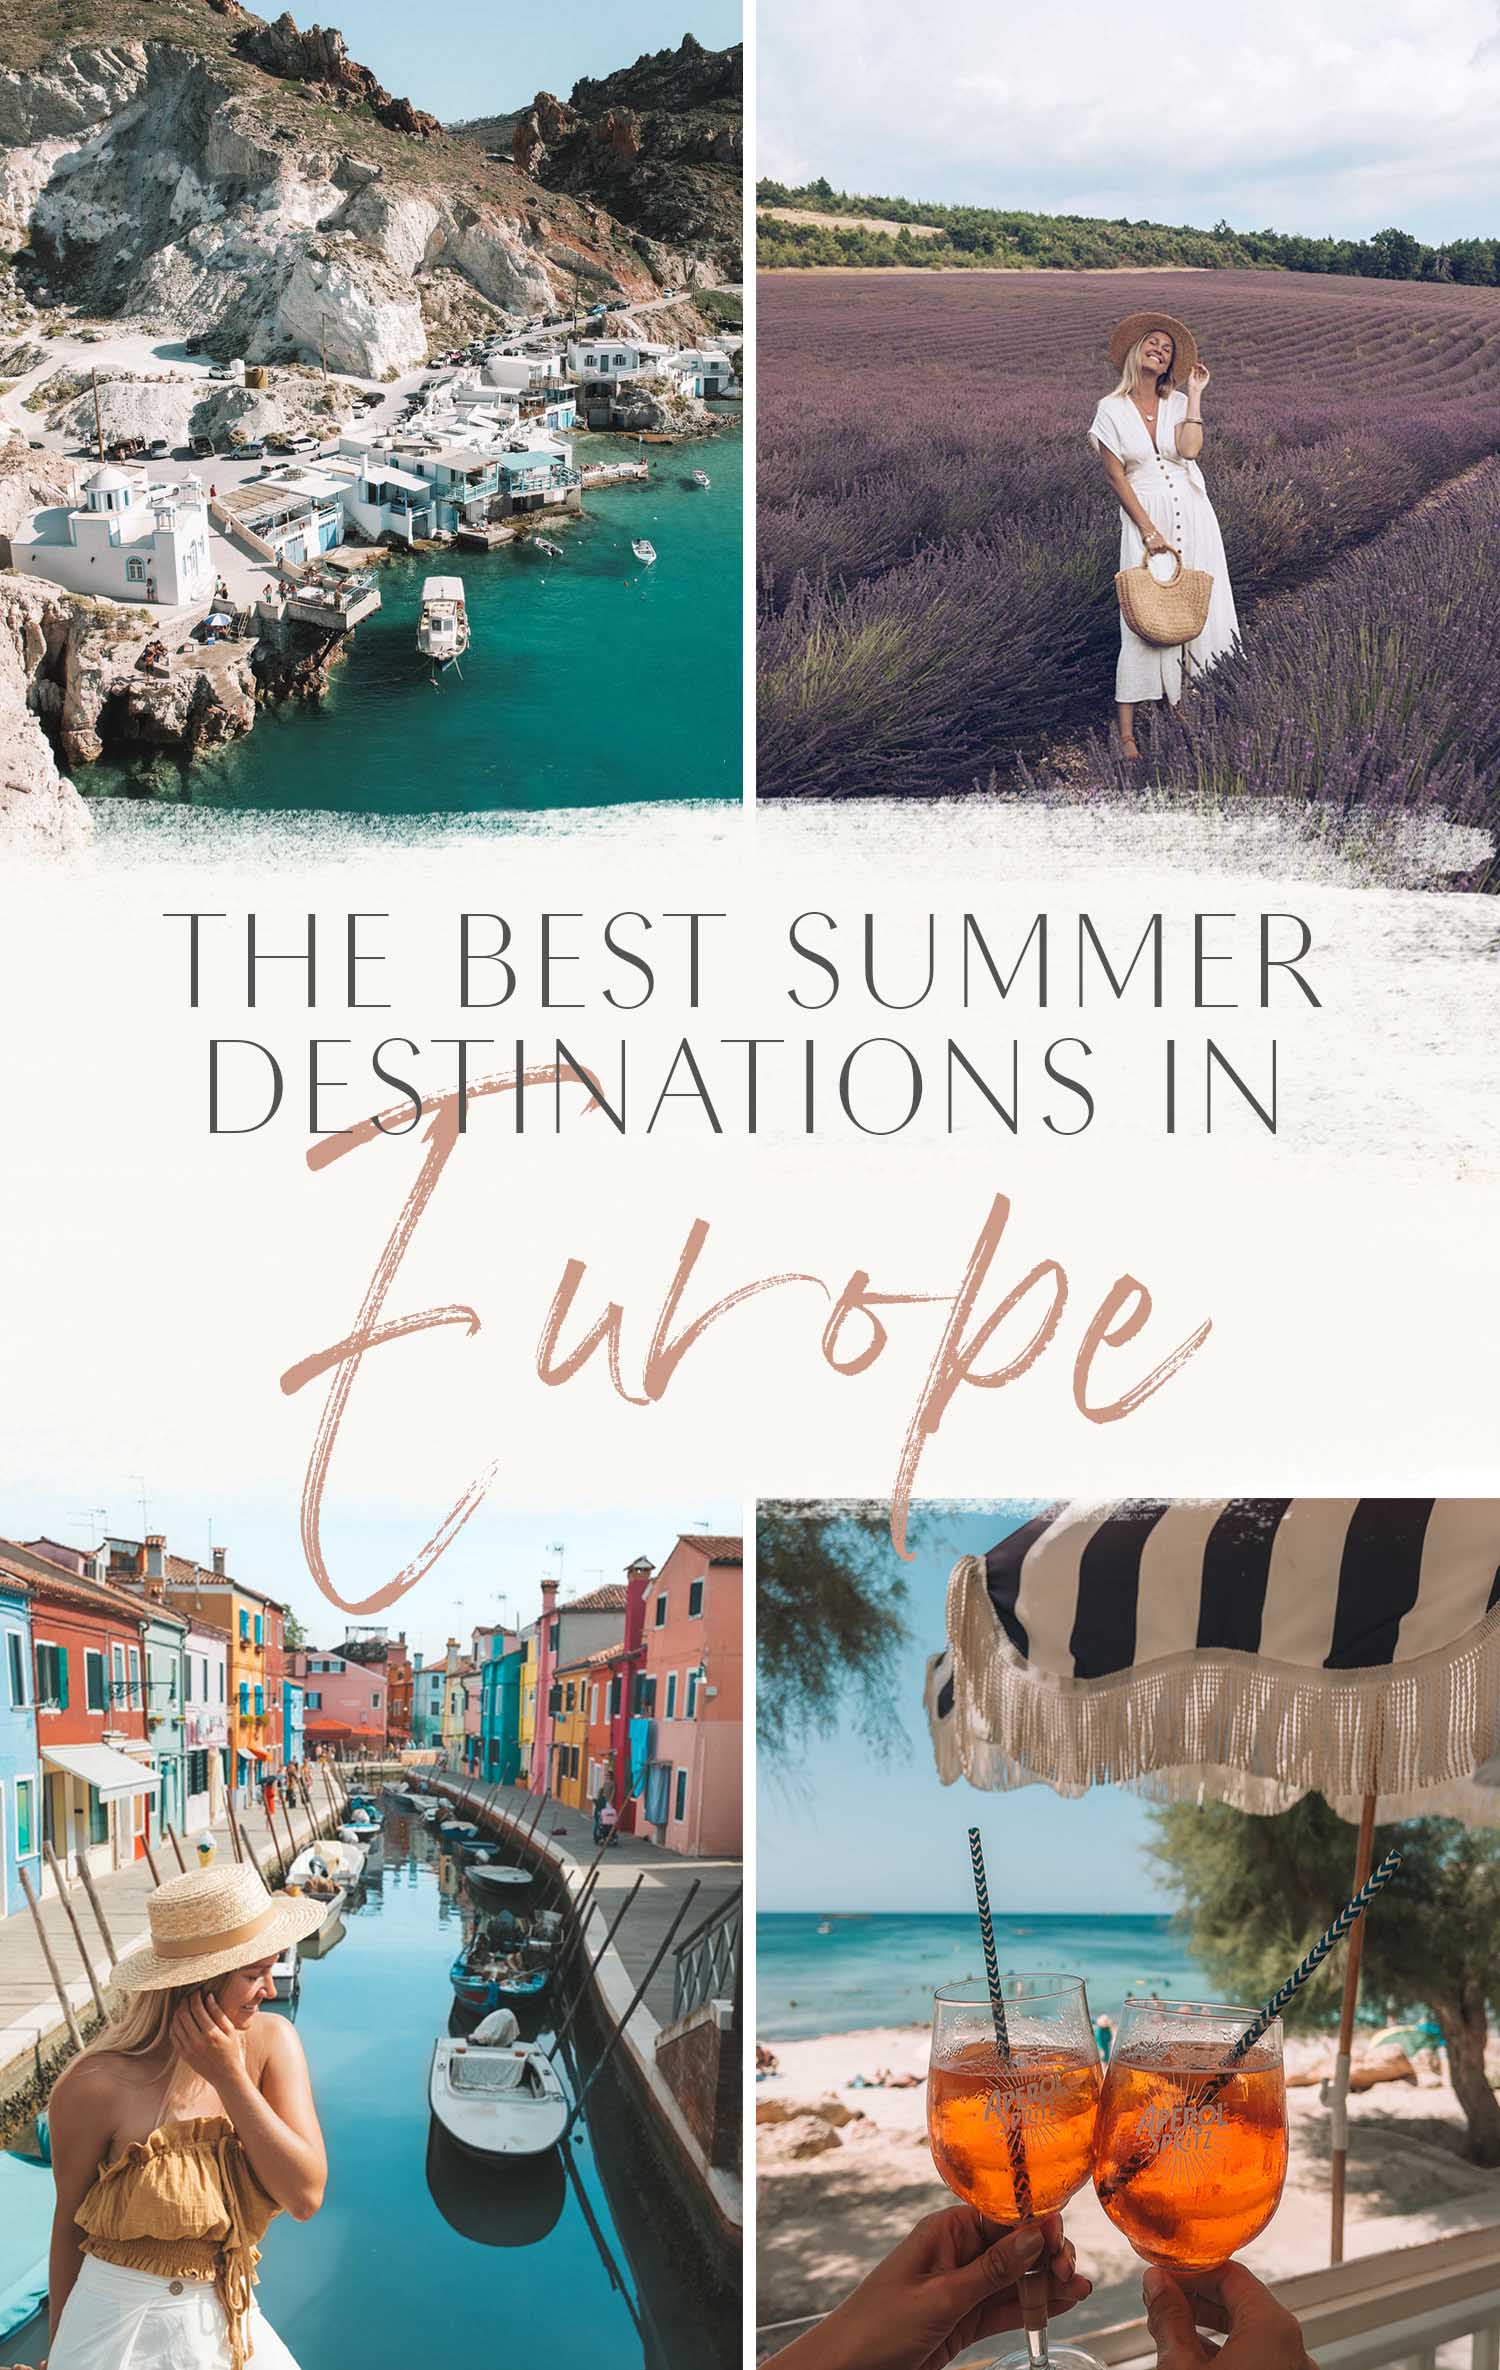 The Best Summer Destinations in Europe